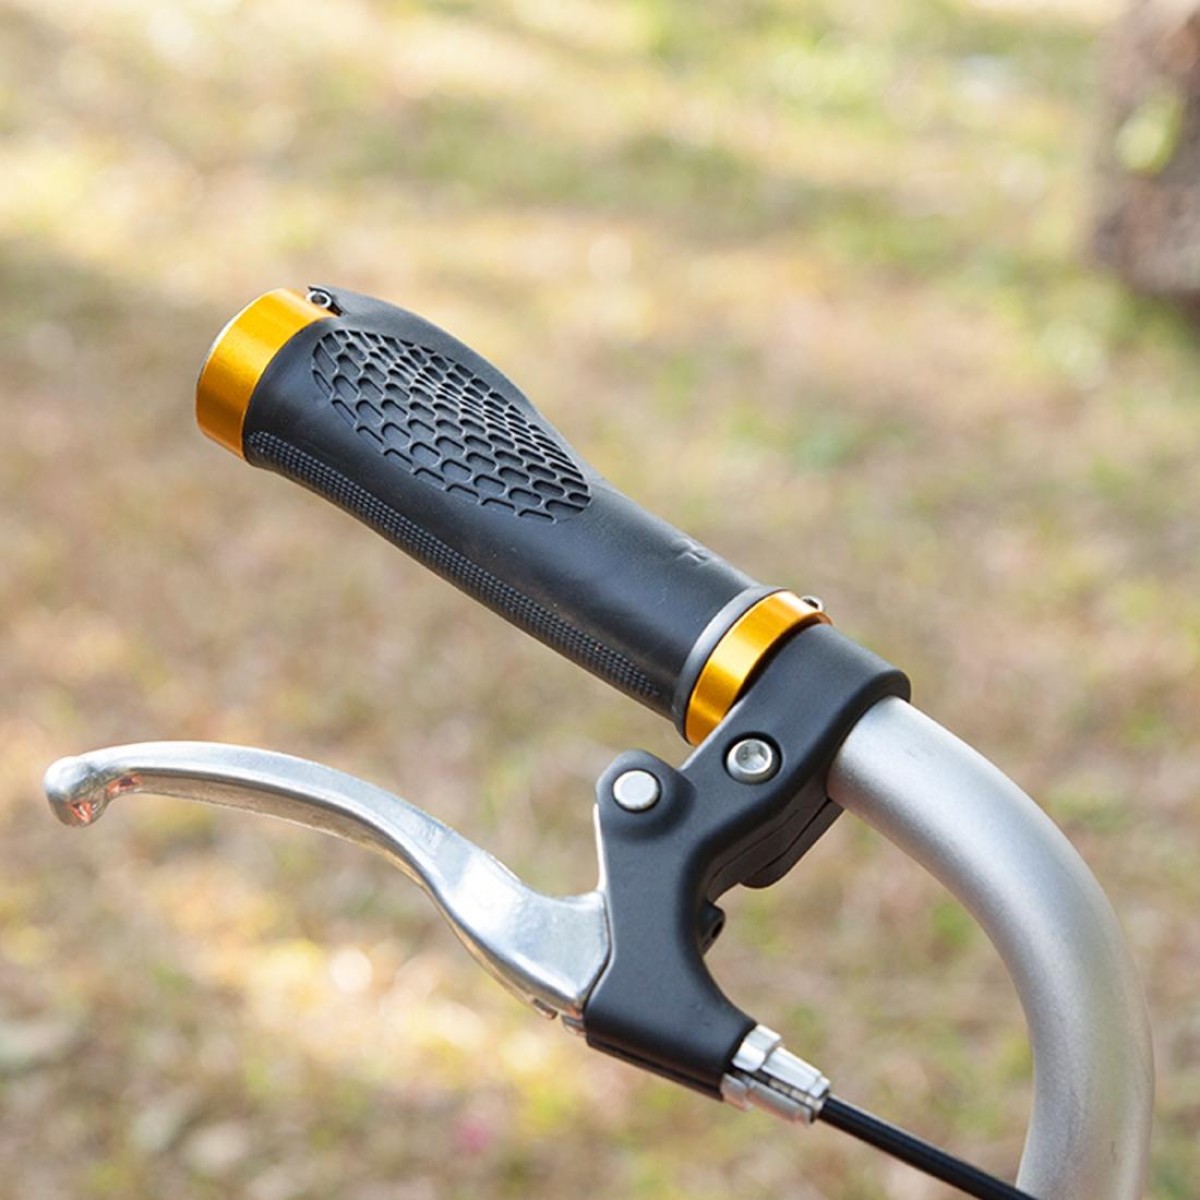 OQSPORT 2 PCS Bike Hand Grips Covers Bilateral Lock MTB Bicycle Anti-slip Handlebar Grips